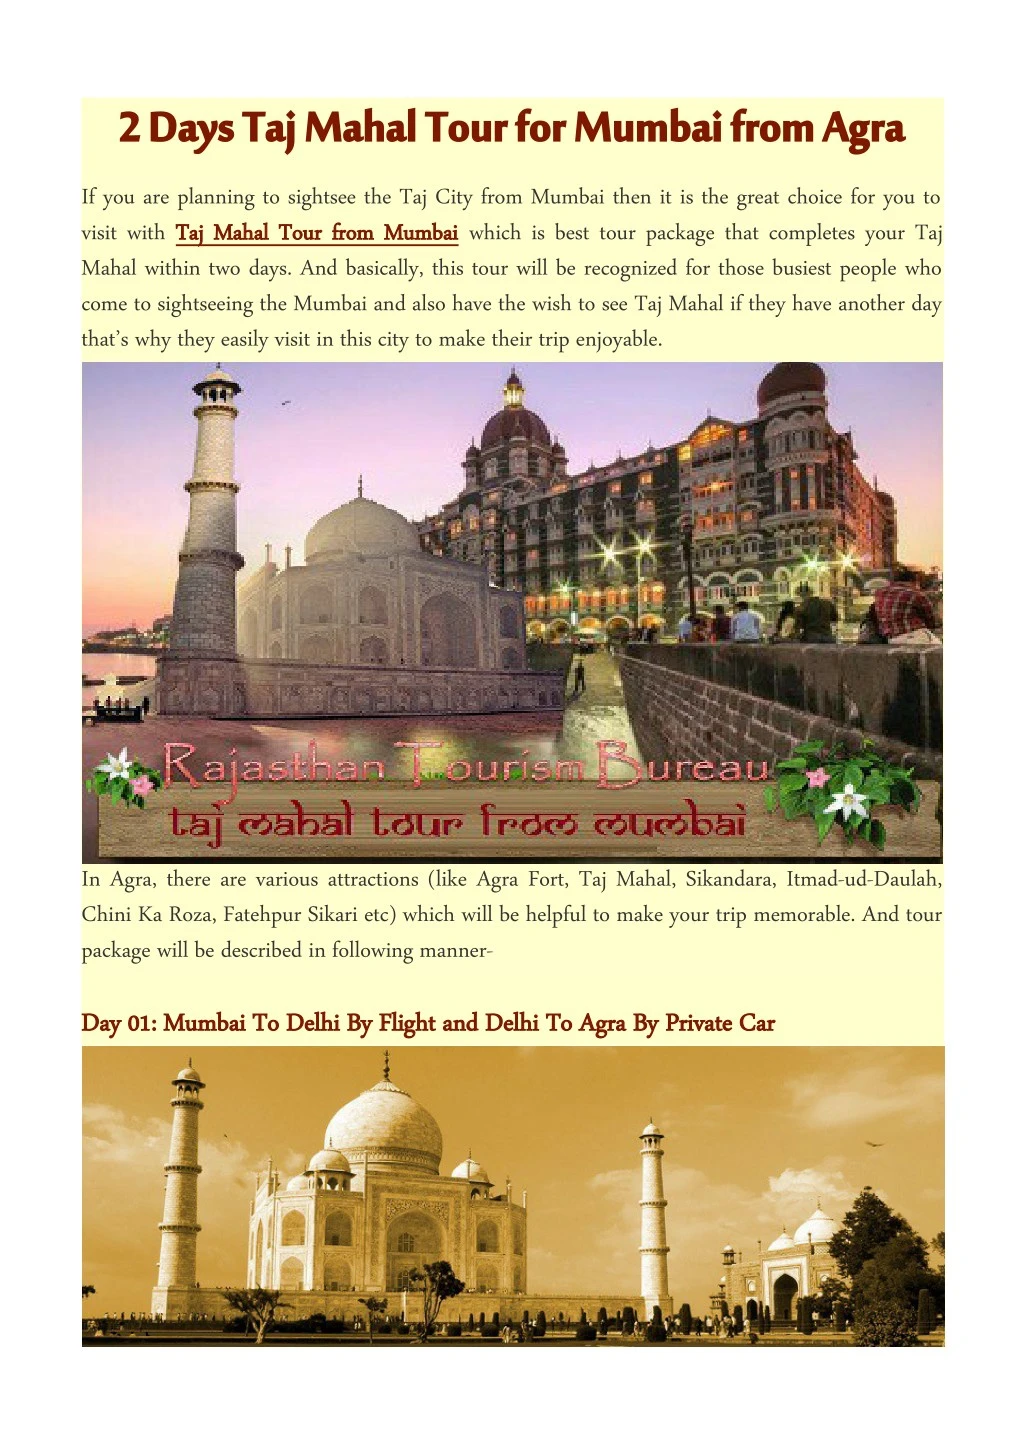 2 days taj mahal tour for mumbai from agra 2 days